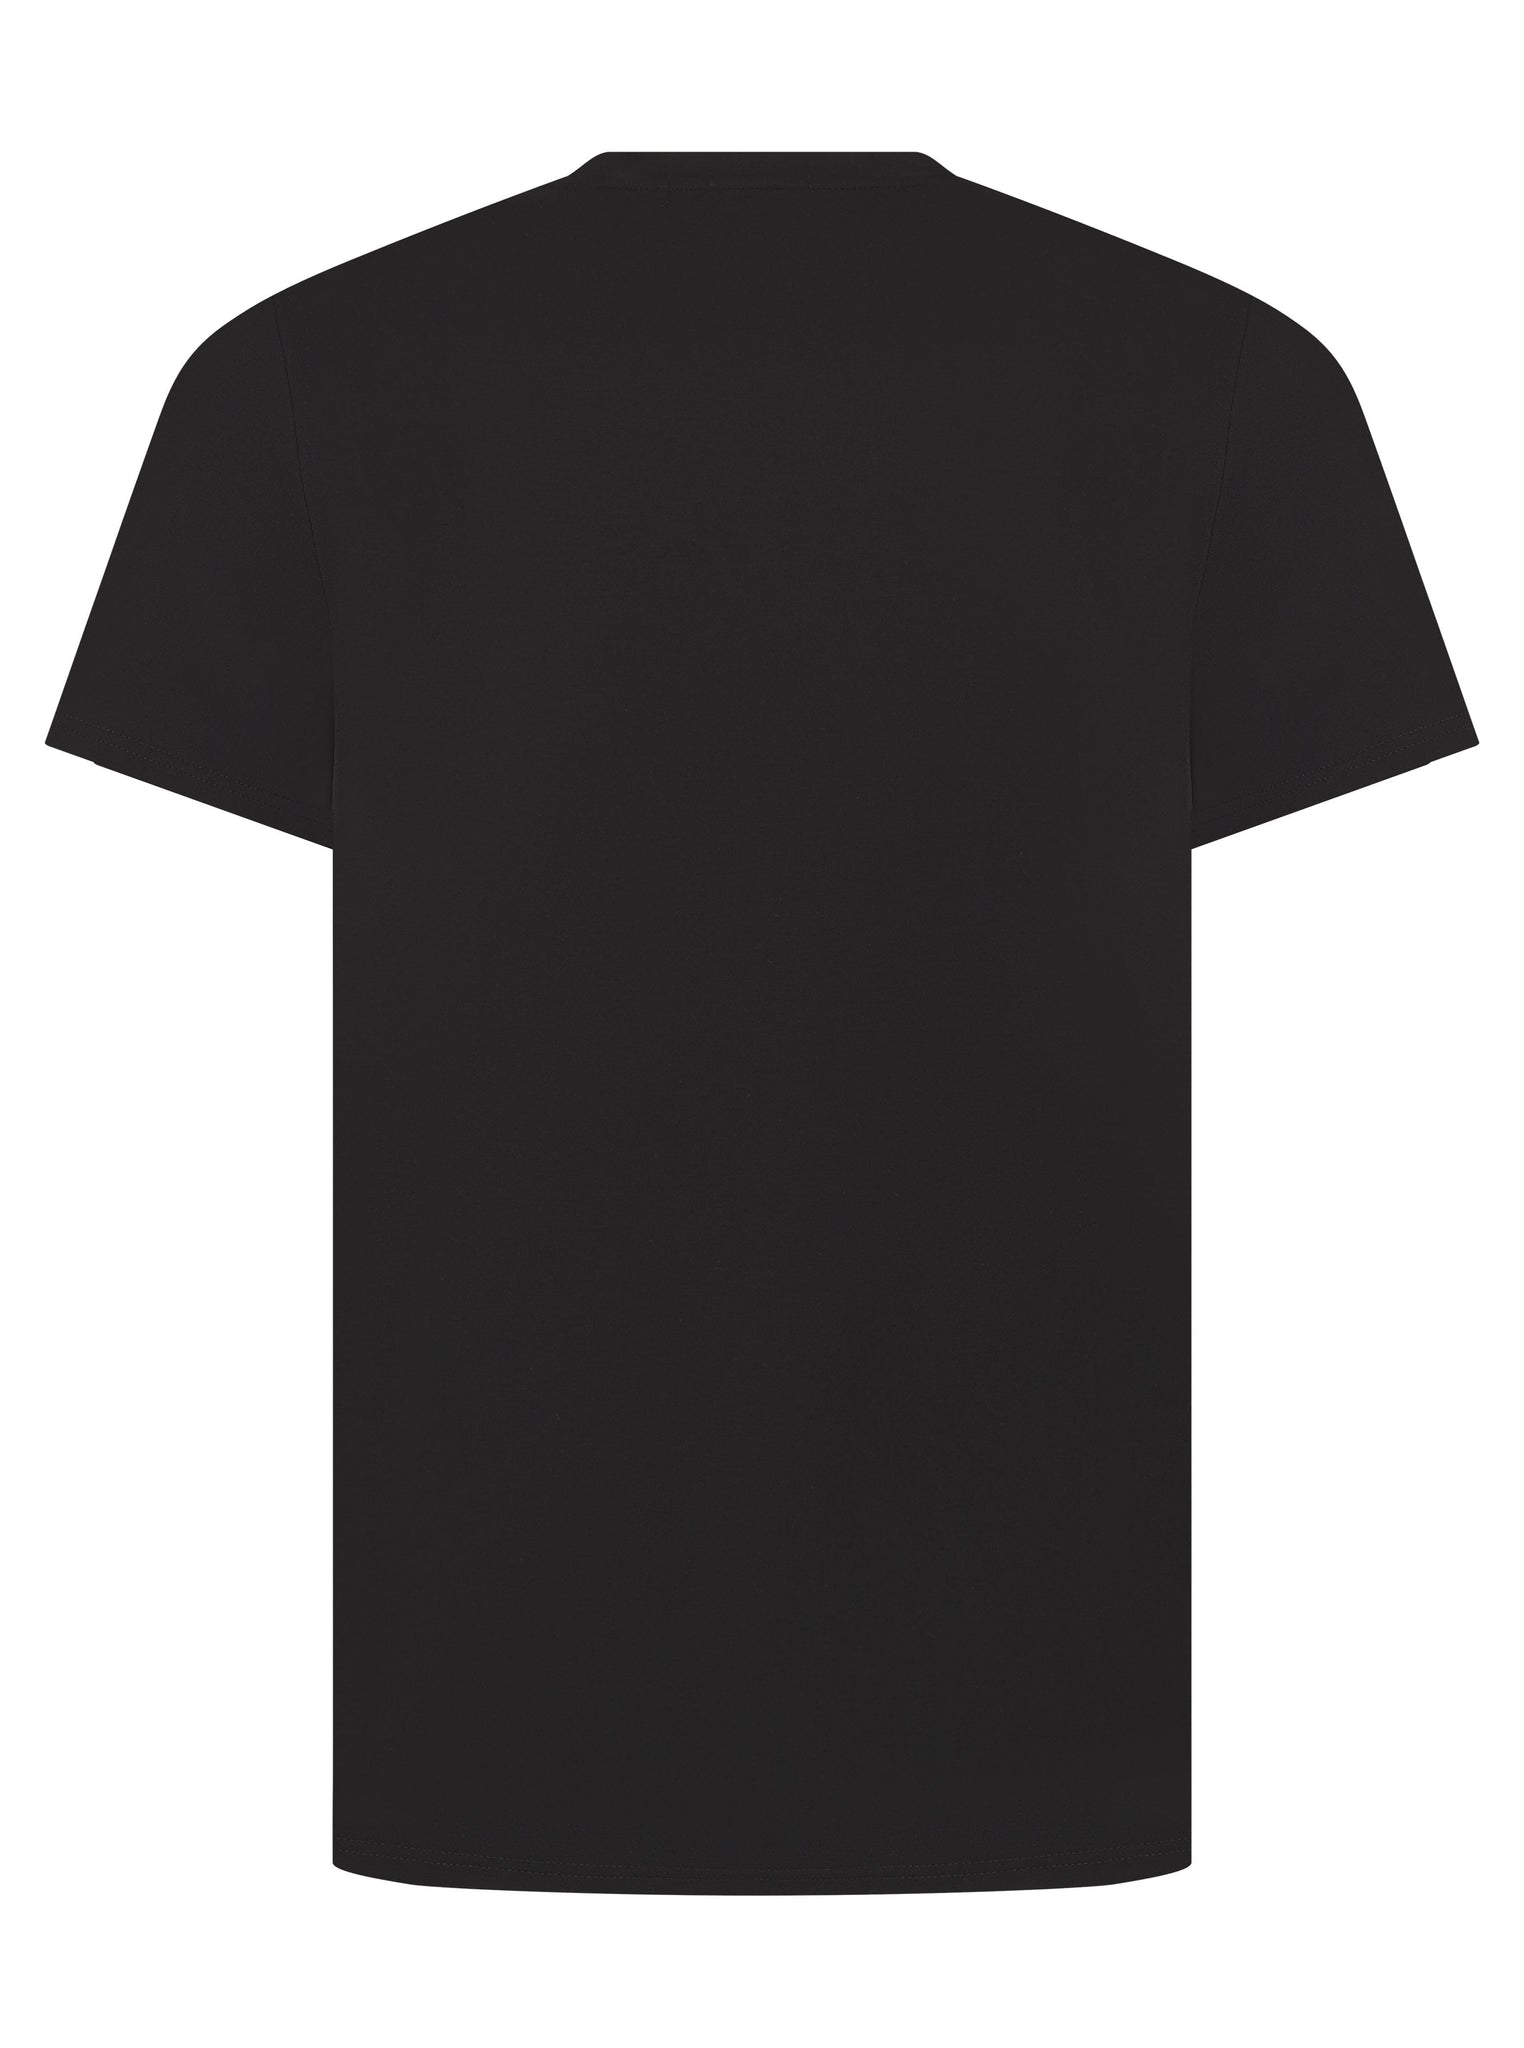 Tech Pocket T-shirt Black/Black